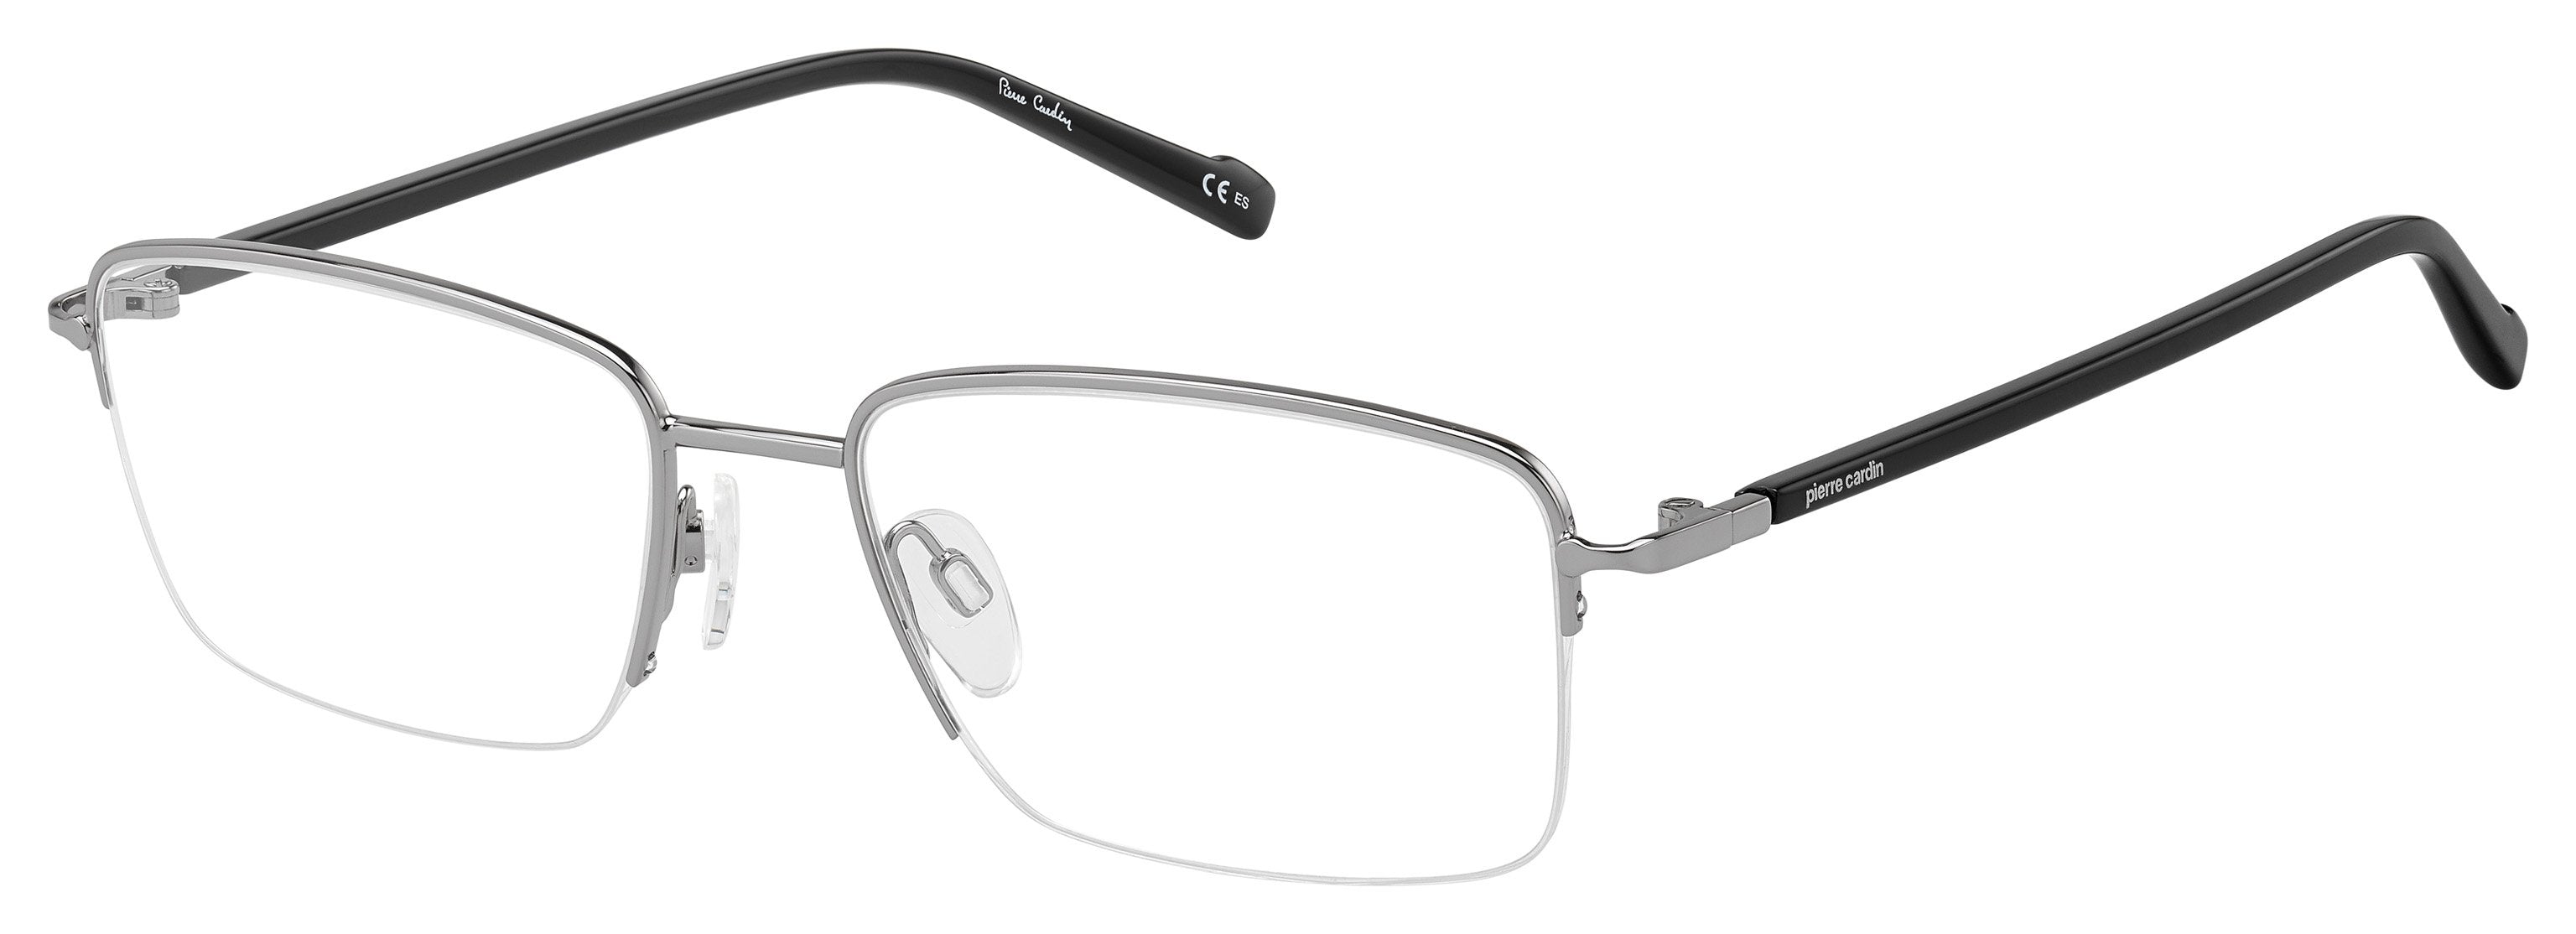 Pierre Cardin Eyeglasses Rectangular Man